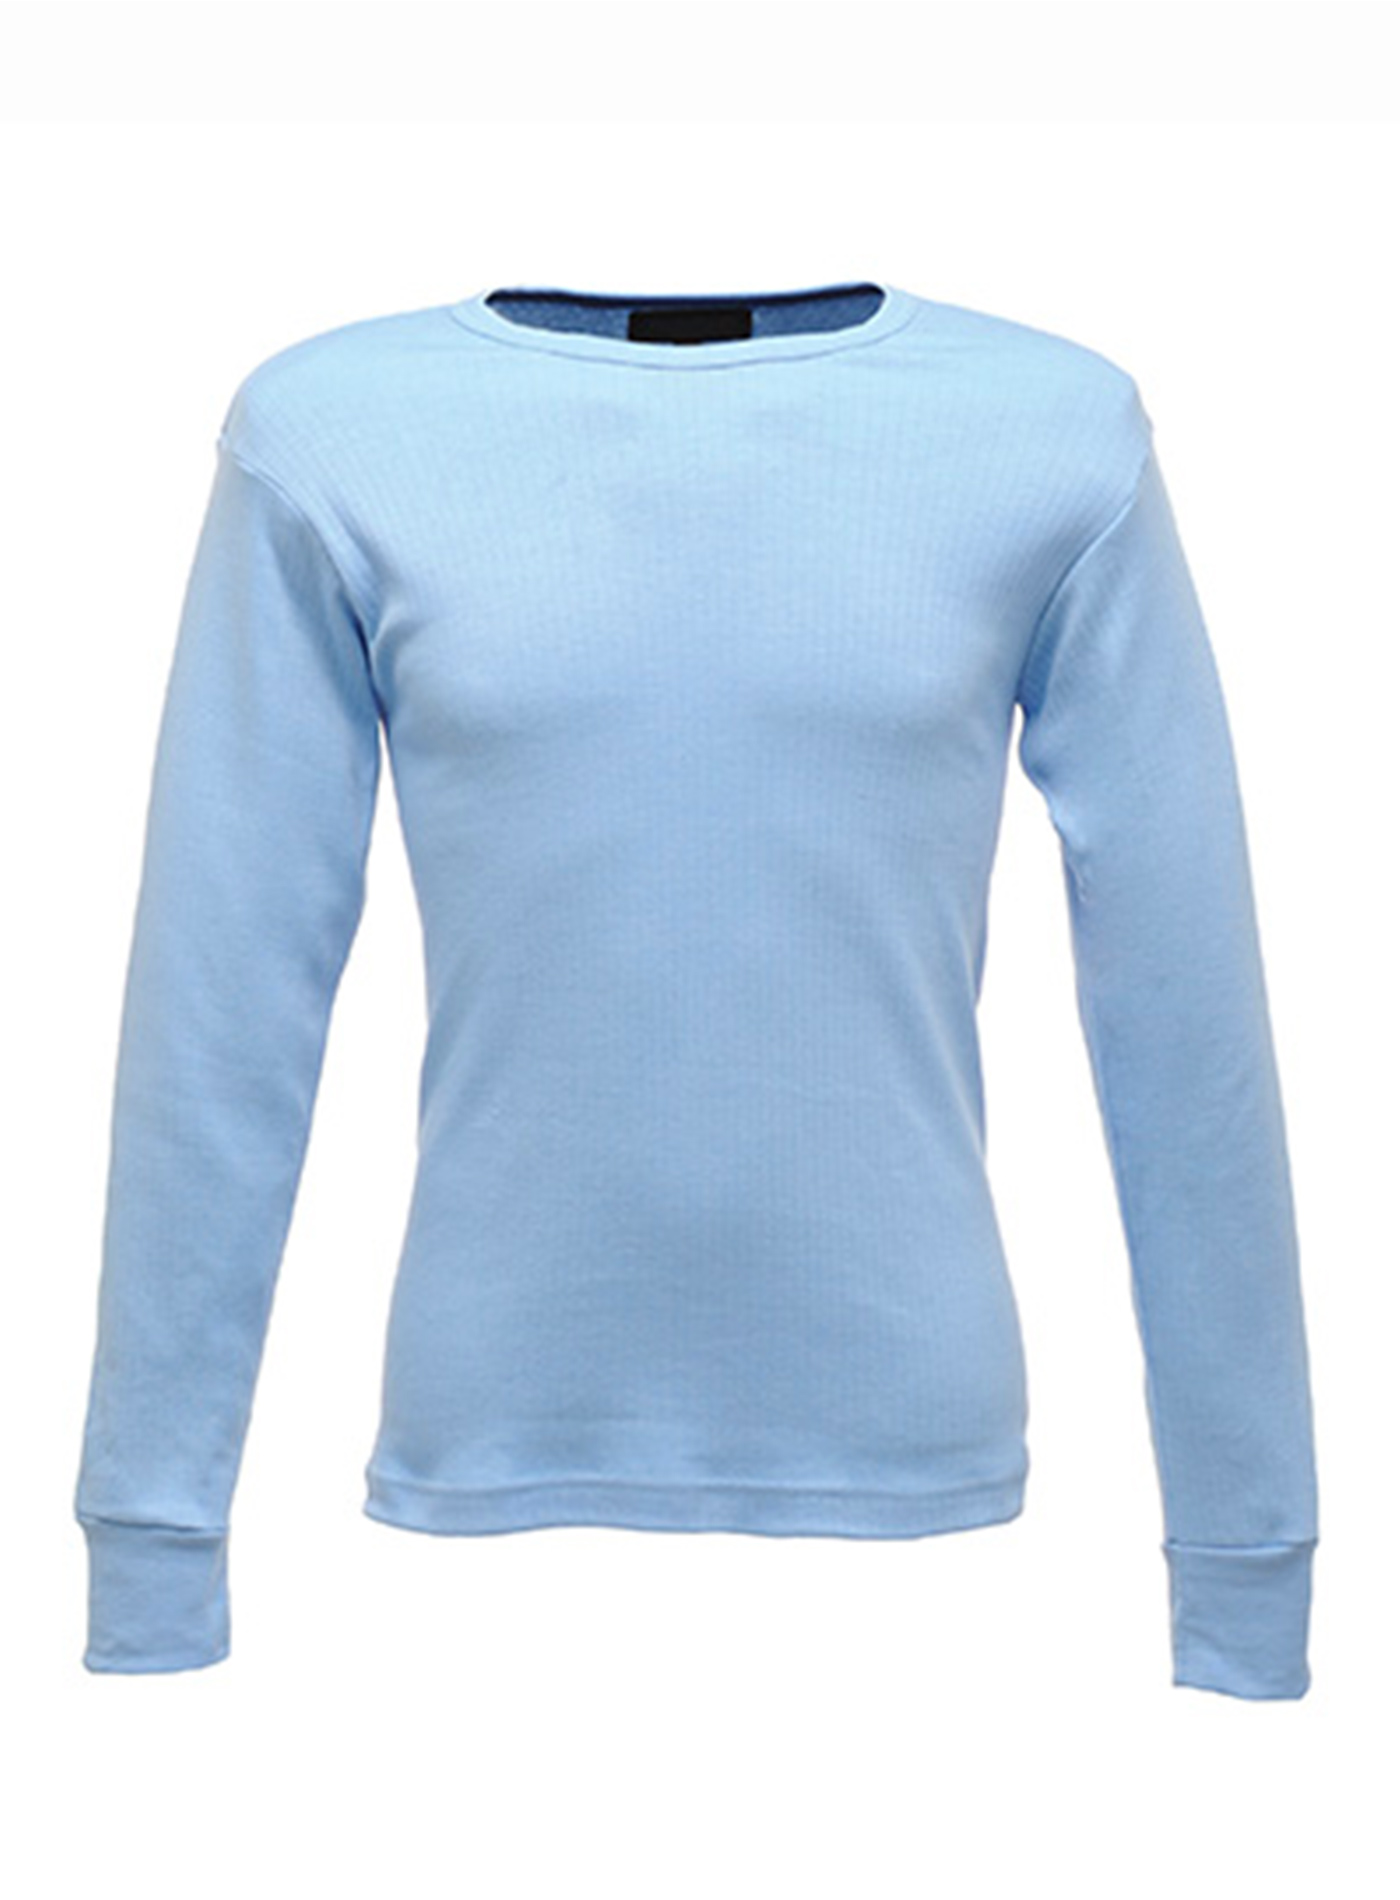 Pánské tričko Regata Profesional Thermal - Modrá L